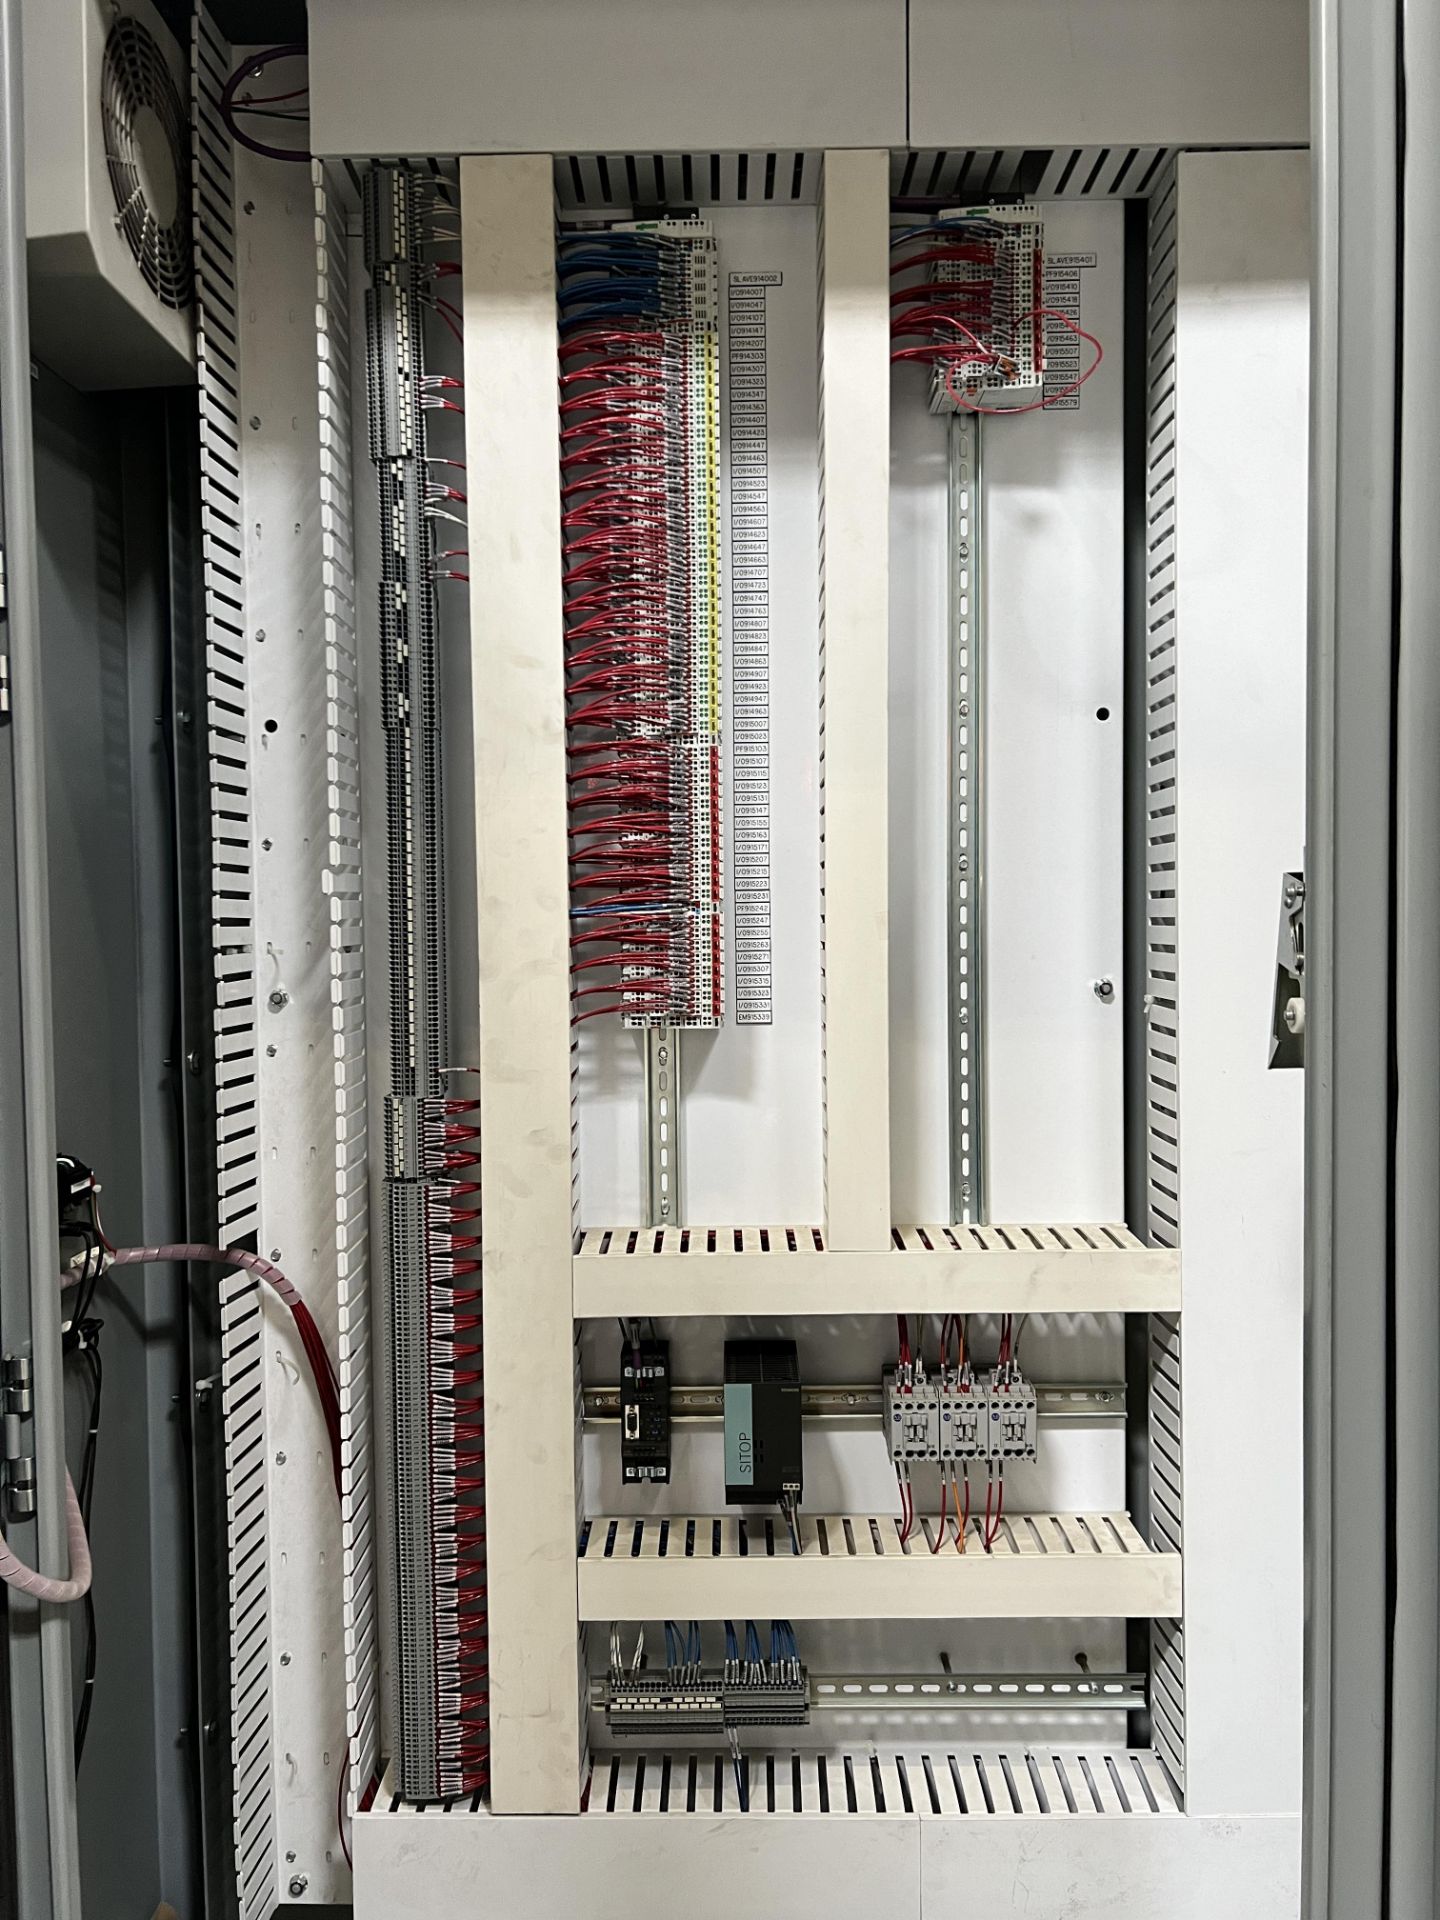 Intelligreated Control Panel 480VAC, 3 Phase - Image 7 of 9